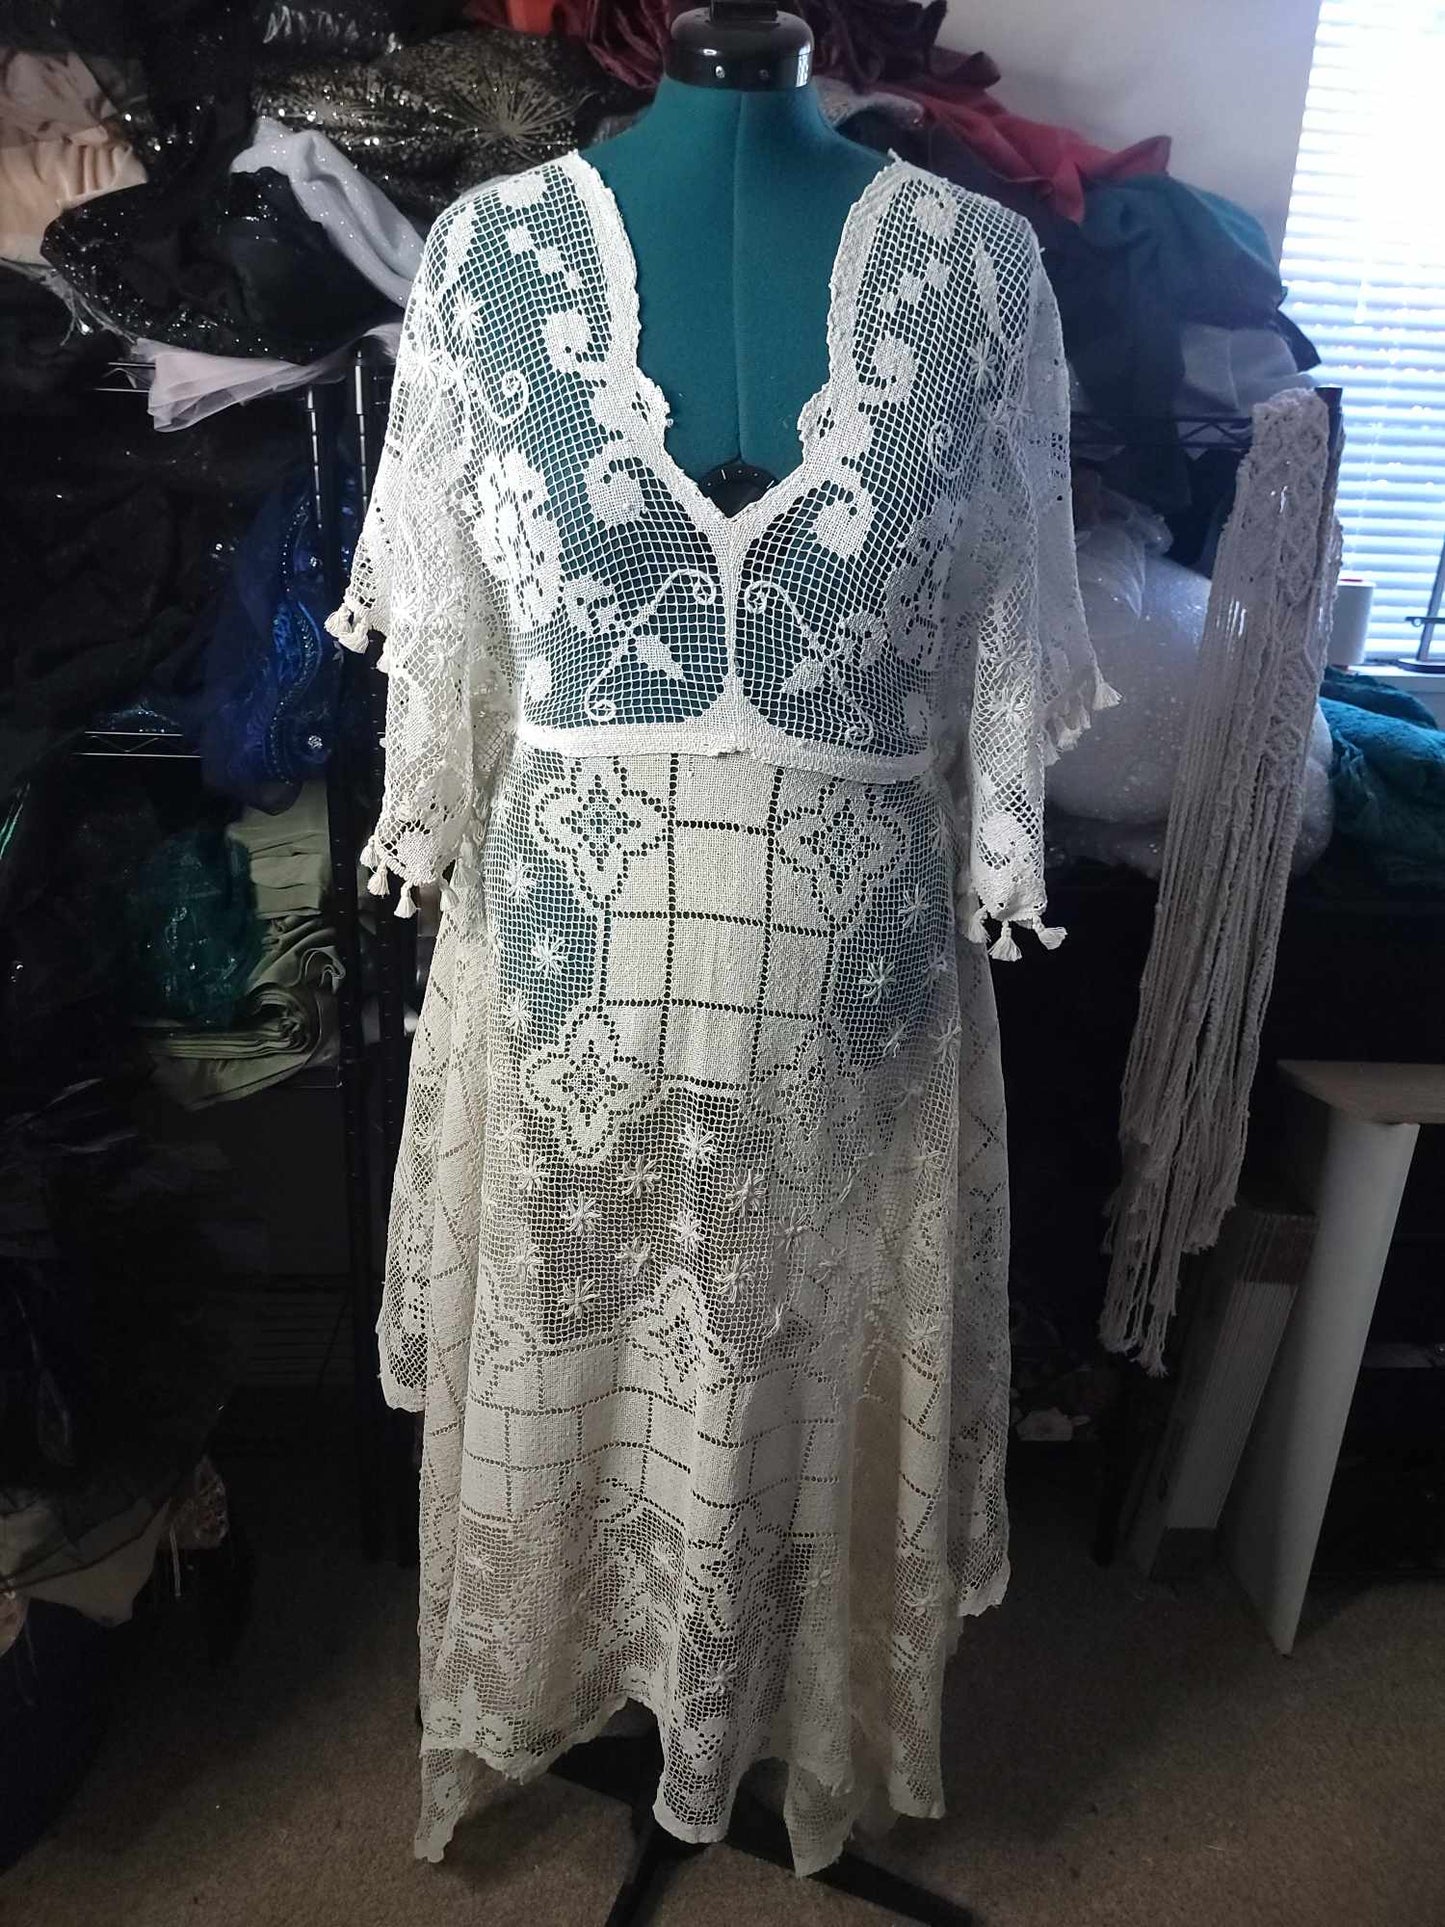 SM-LG size Off-White/Beige Vintage Lace Dress